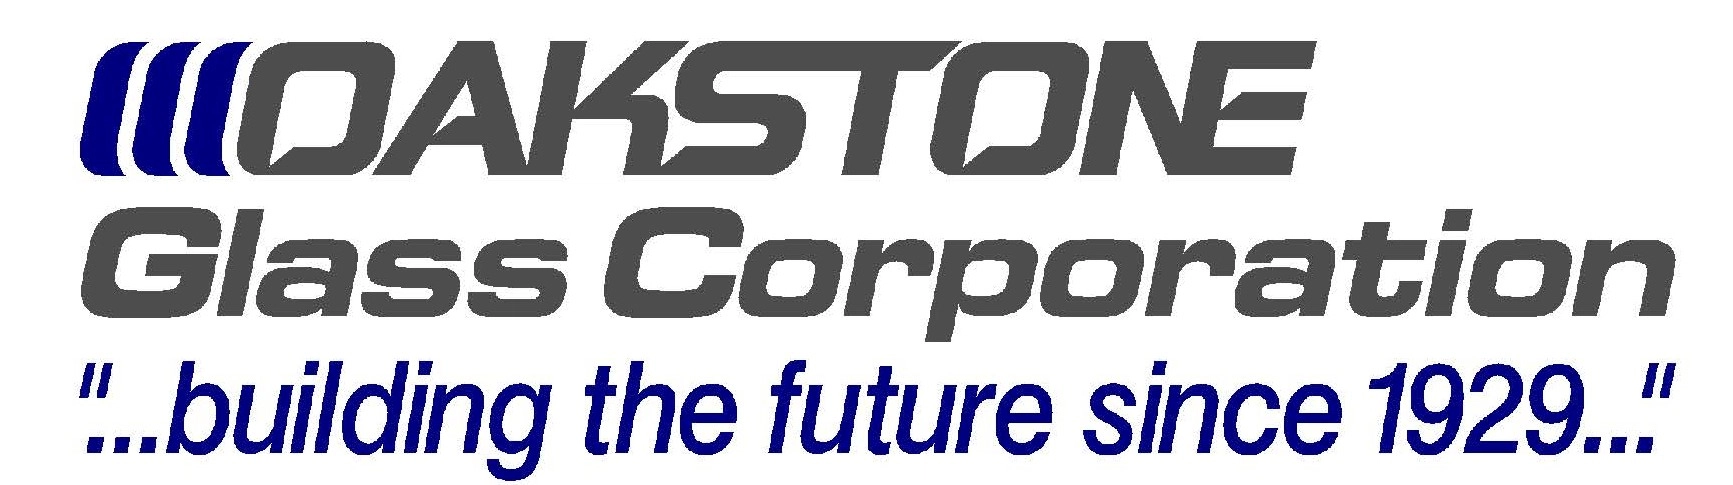 Oakstone Glass Corporation Logo